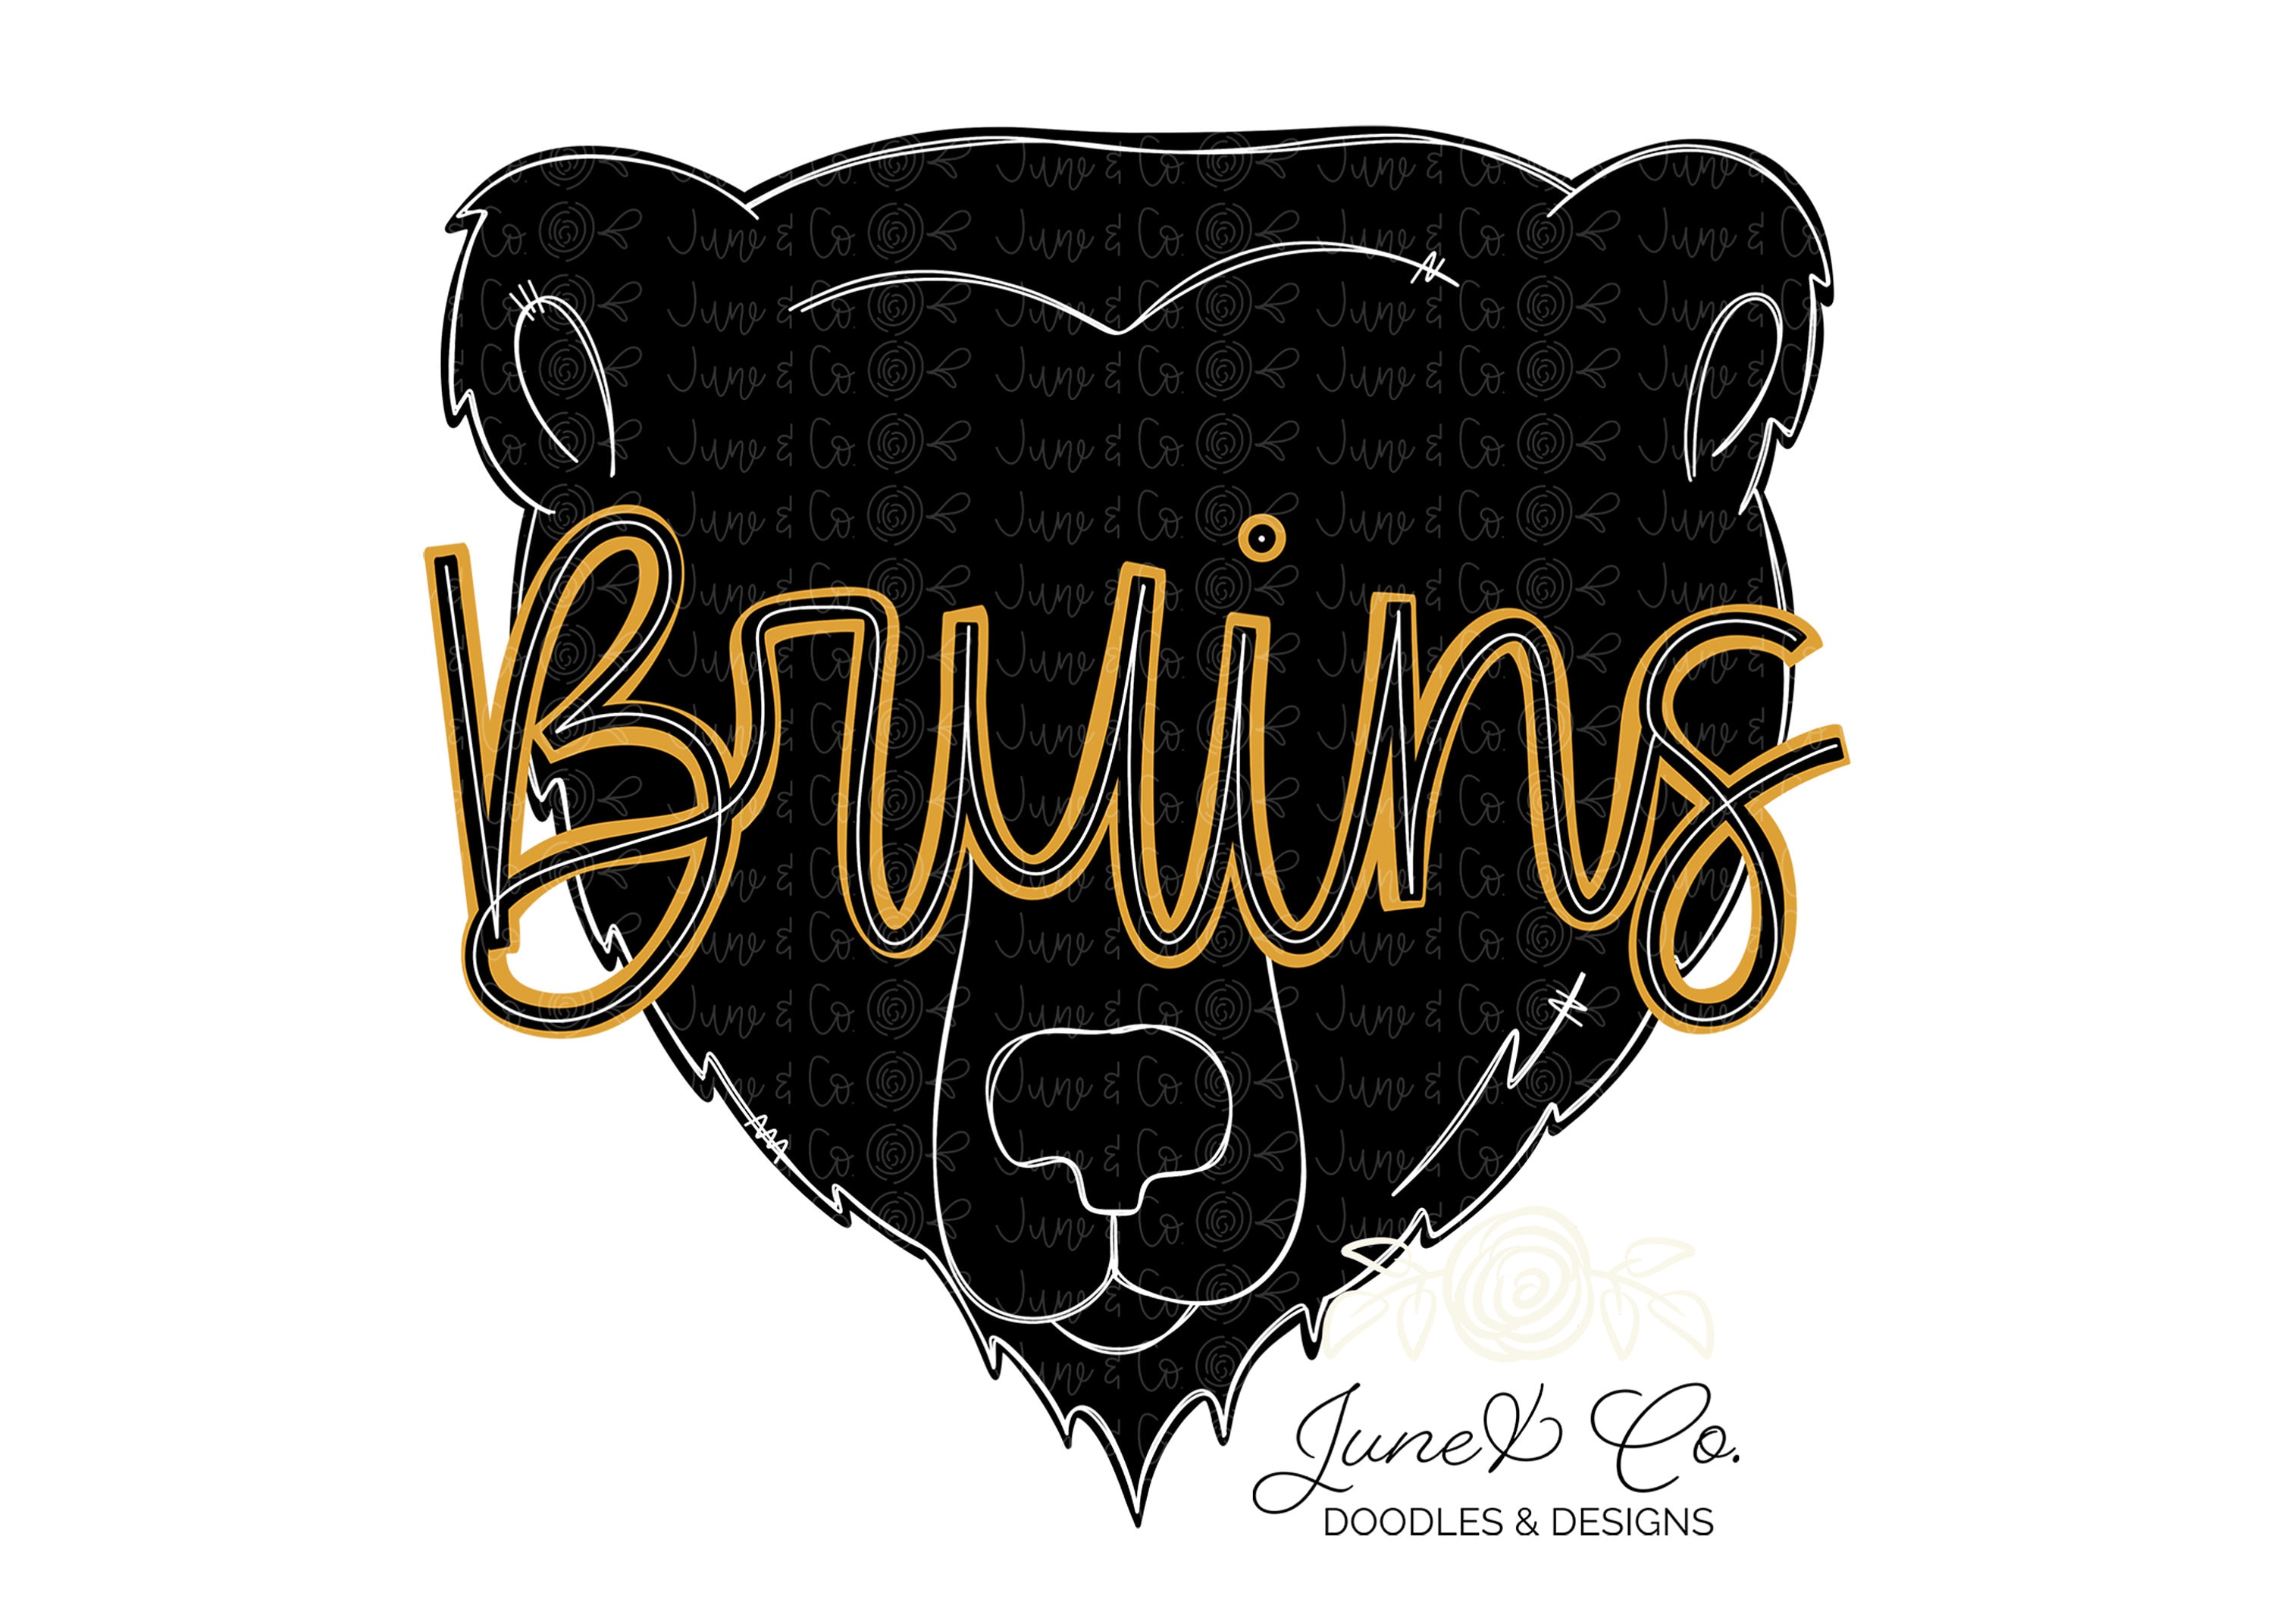 Bruins Wrap: Pooh Bear Logo Makes Its Return For Boston Bruins?